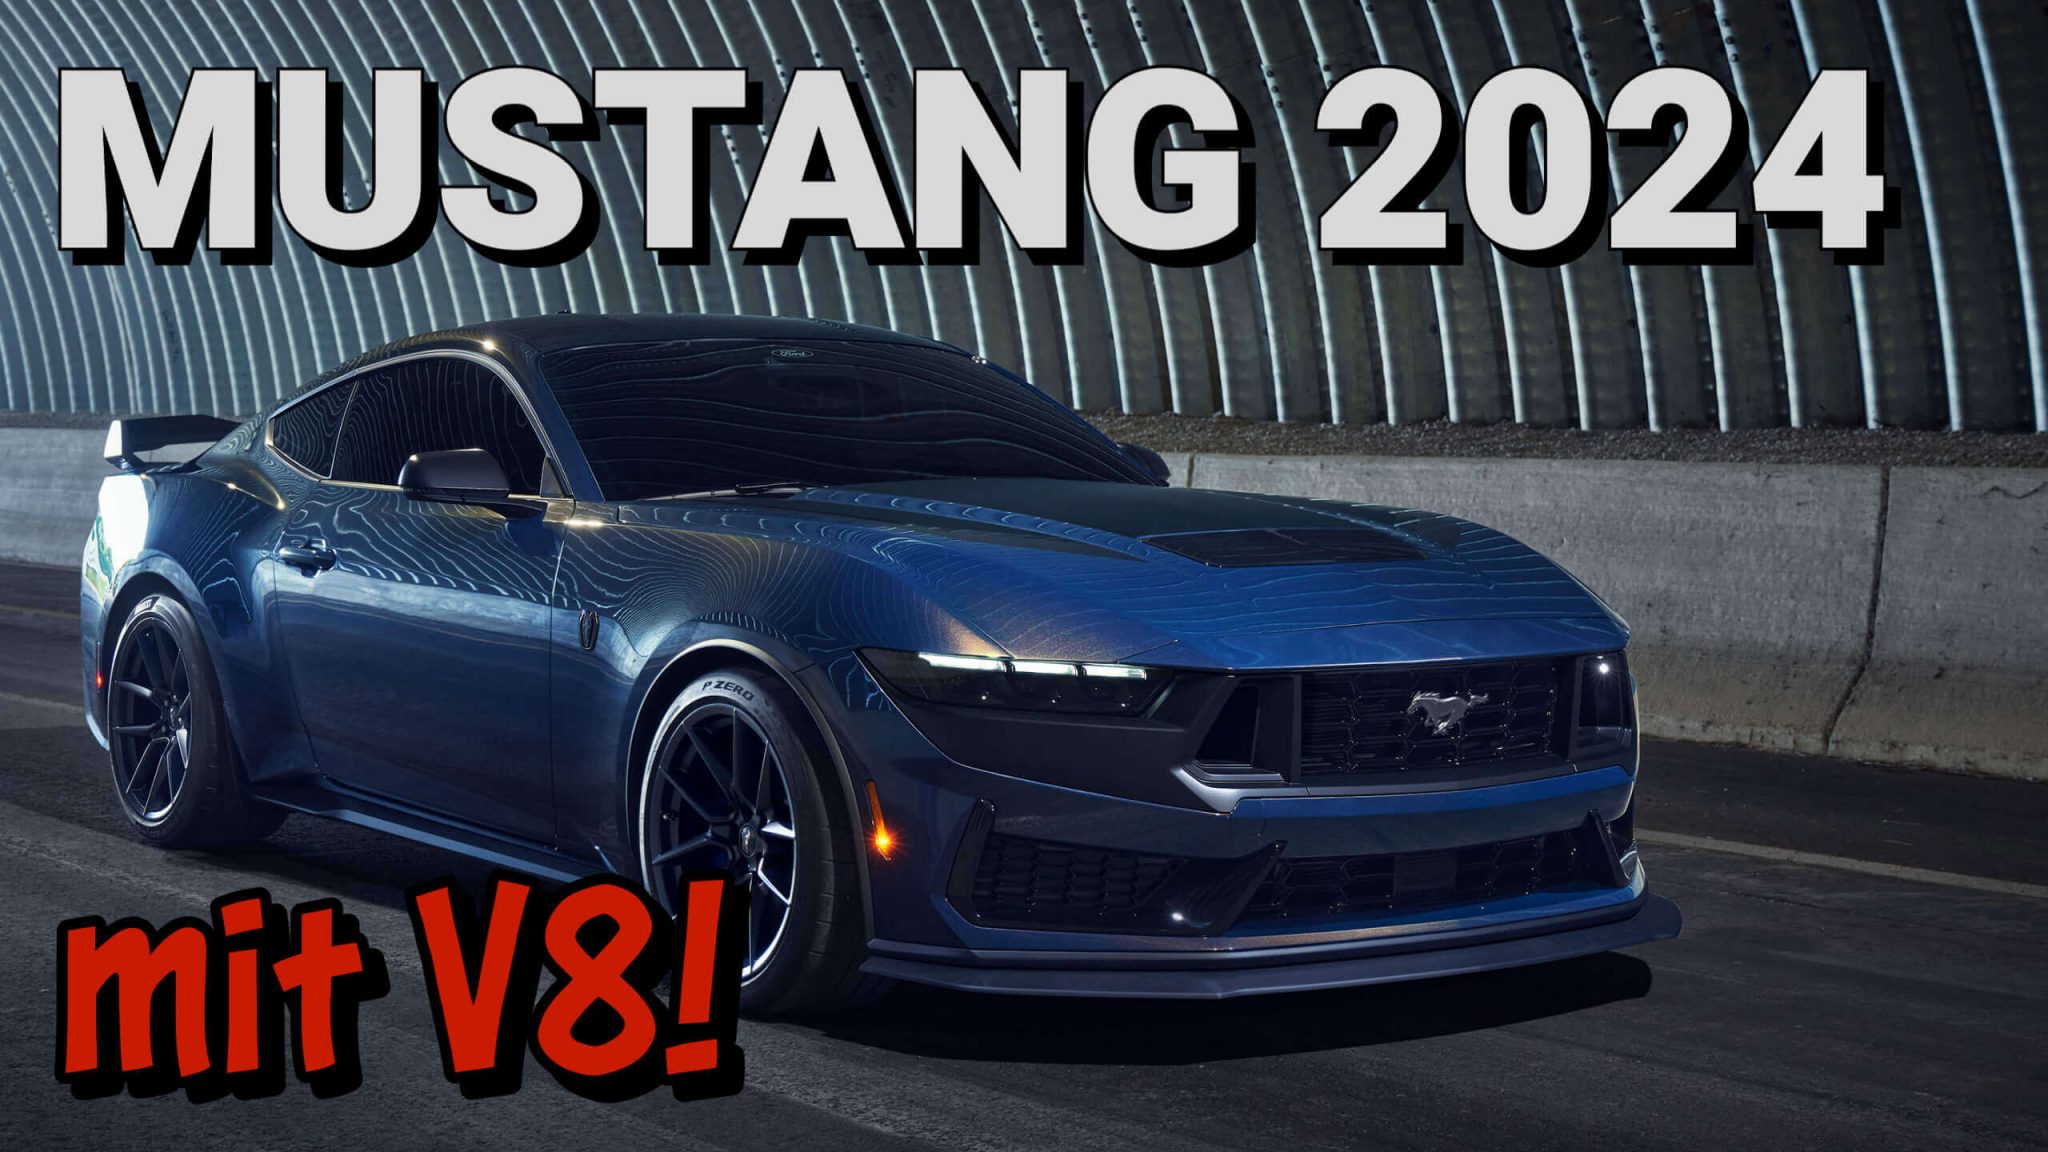 Das ist der neue Ford Mustang 2024 » MUSTANG 302 GmbH